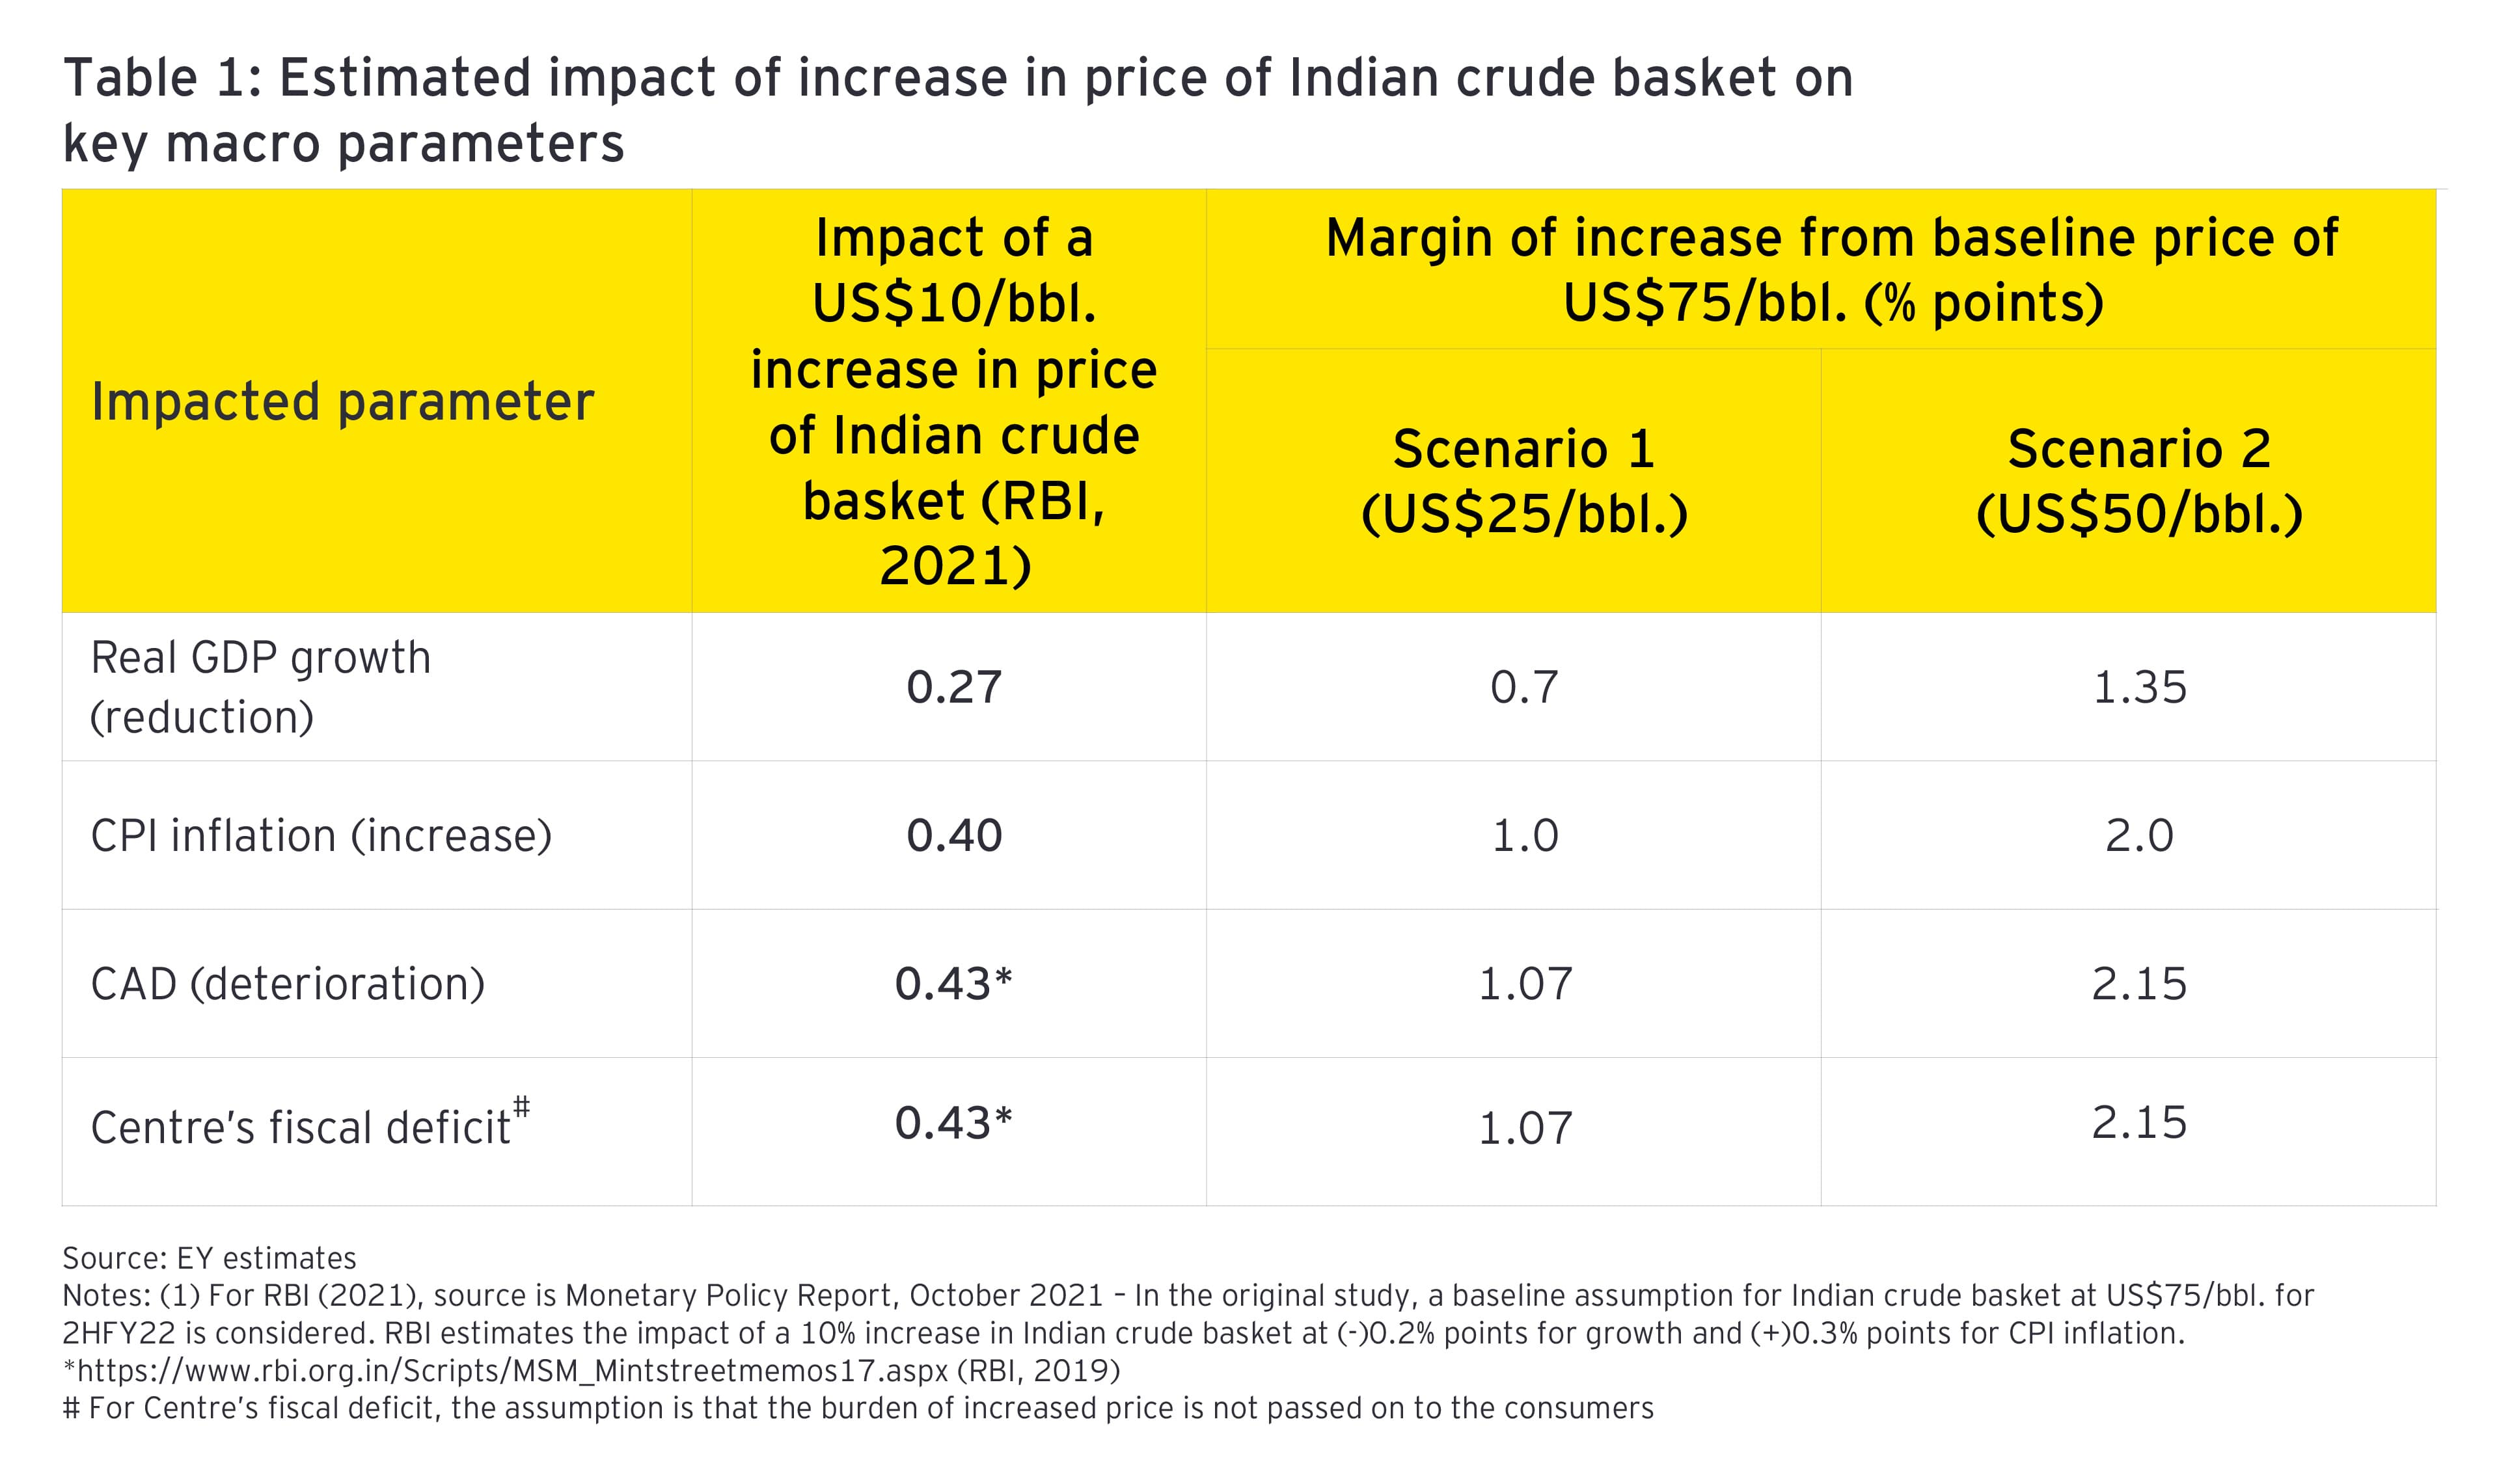 Estimated impact of increase in price of Indian crude basket on key macro parameters